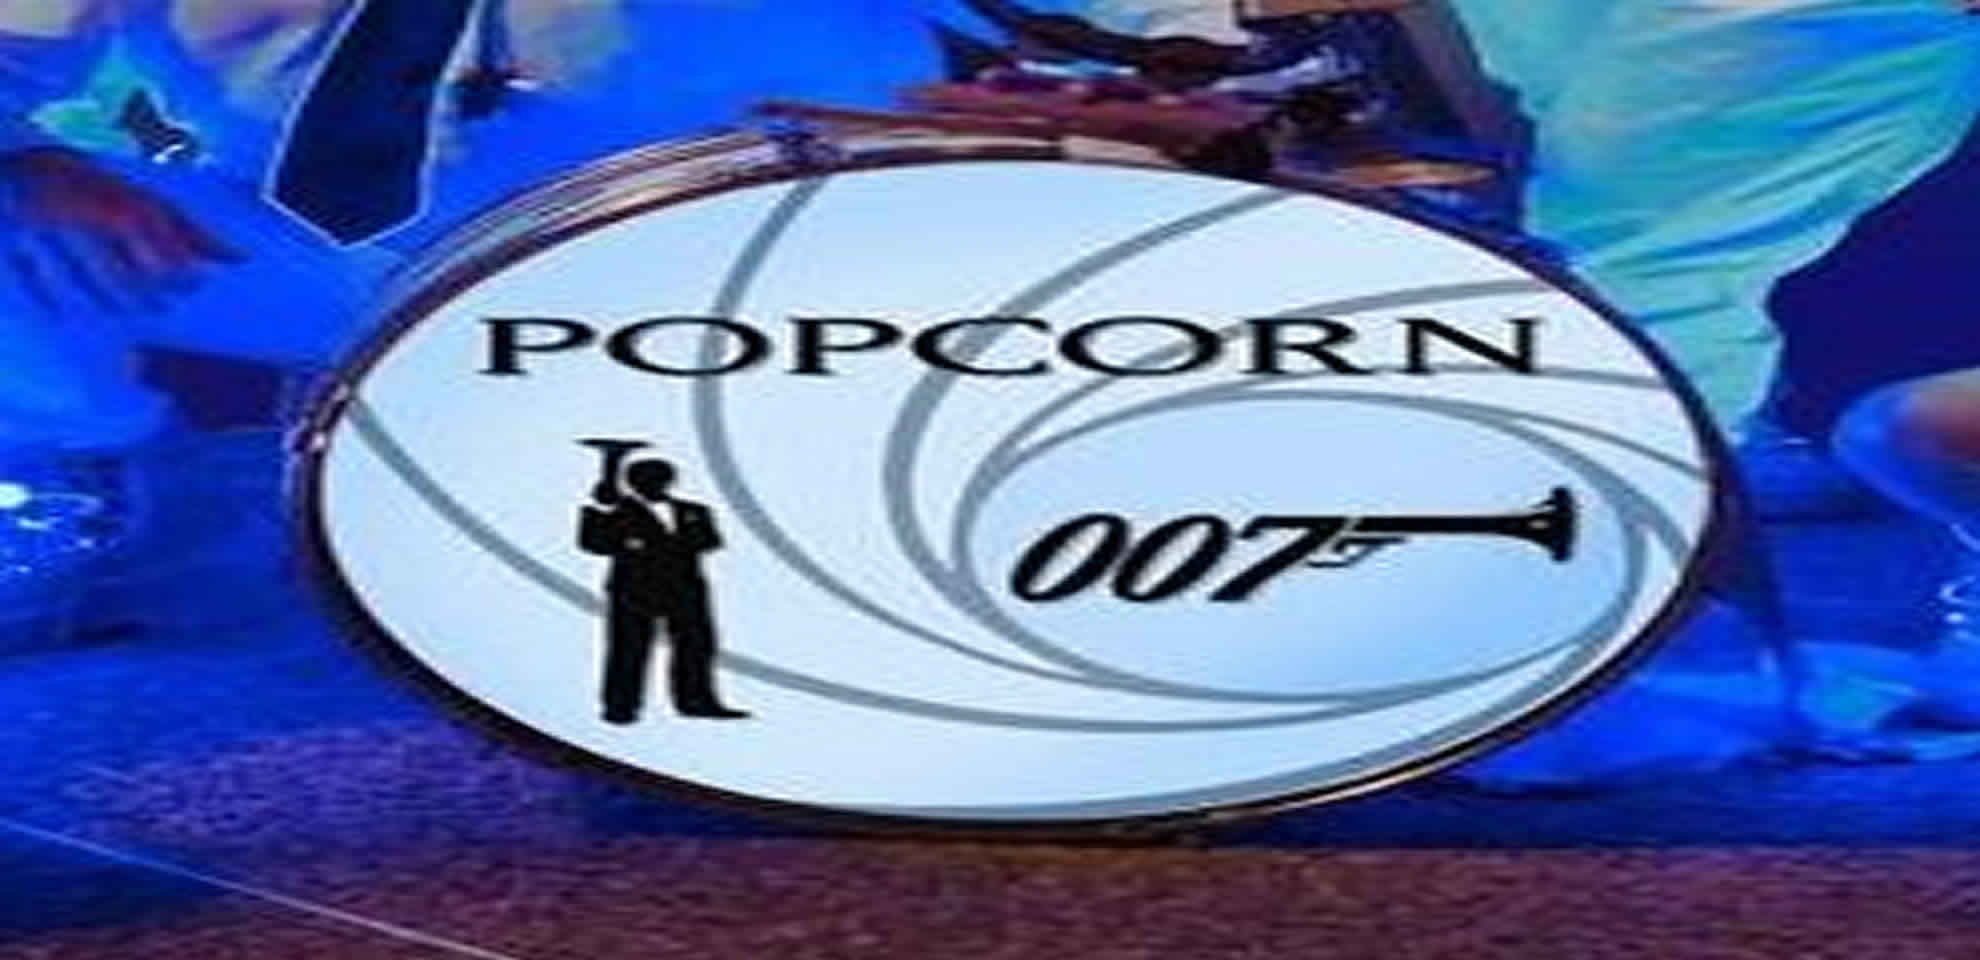 Pop Corn 007